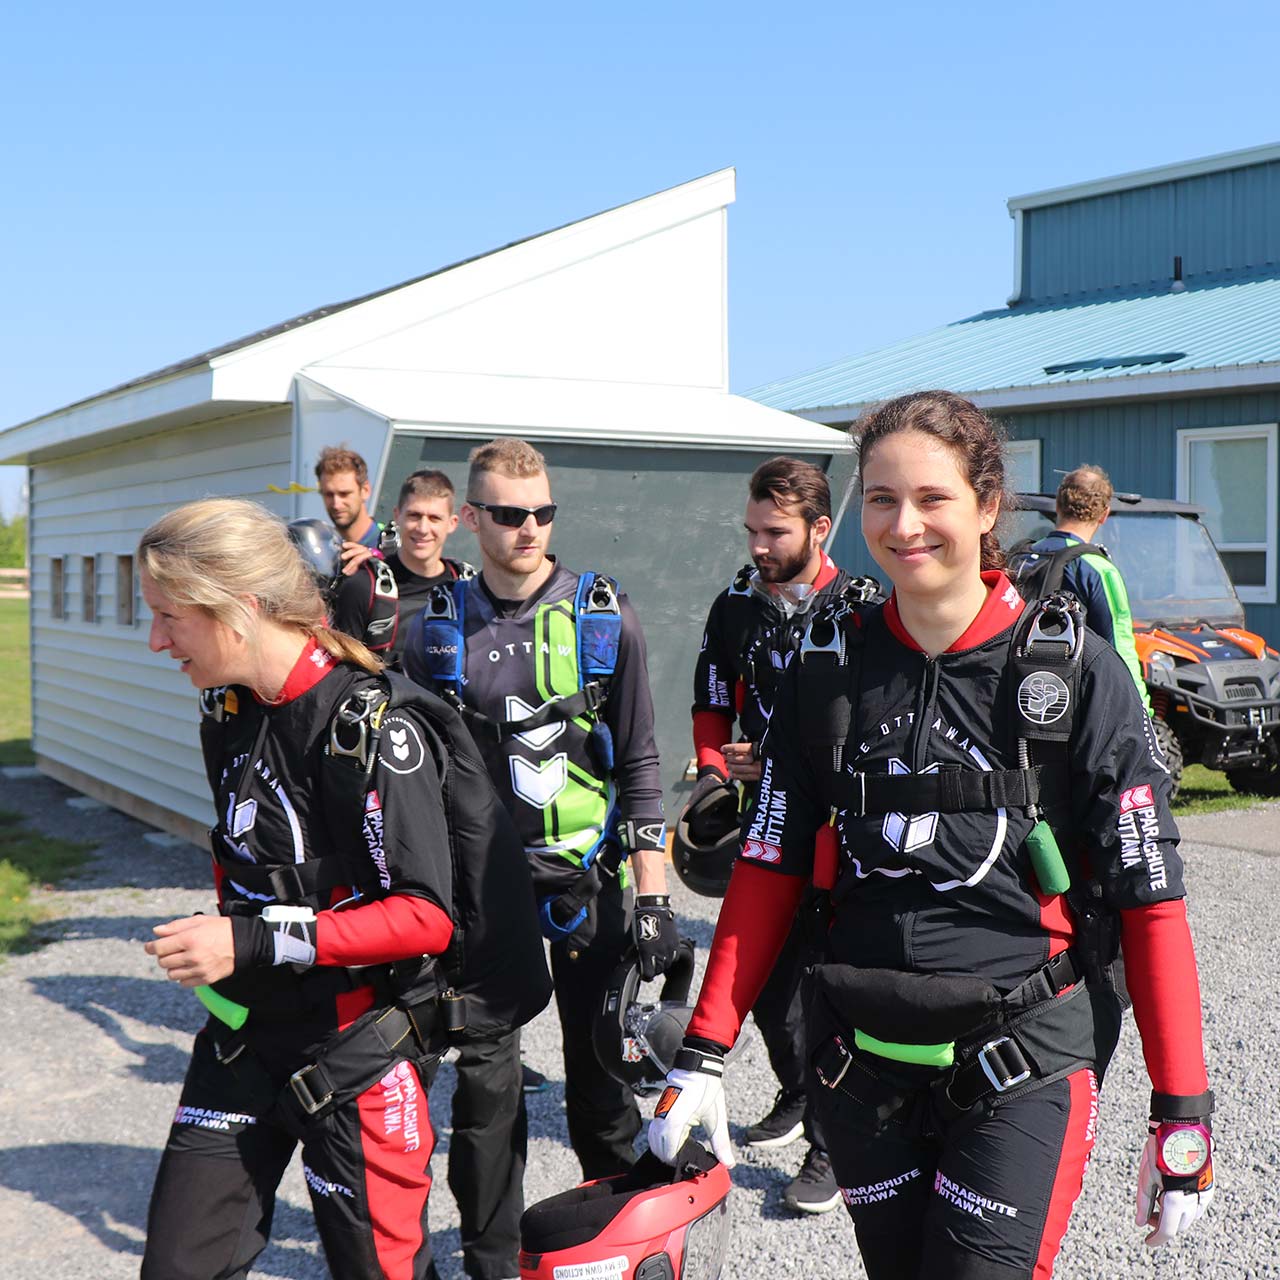 Skydivers walking to board the aircraft at Parachute Ottawa skydiving centre